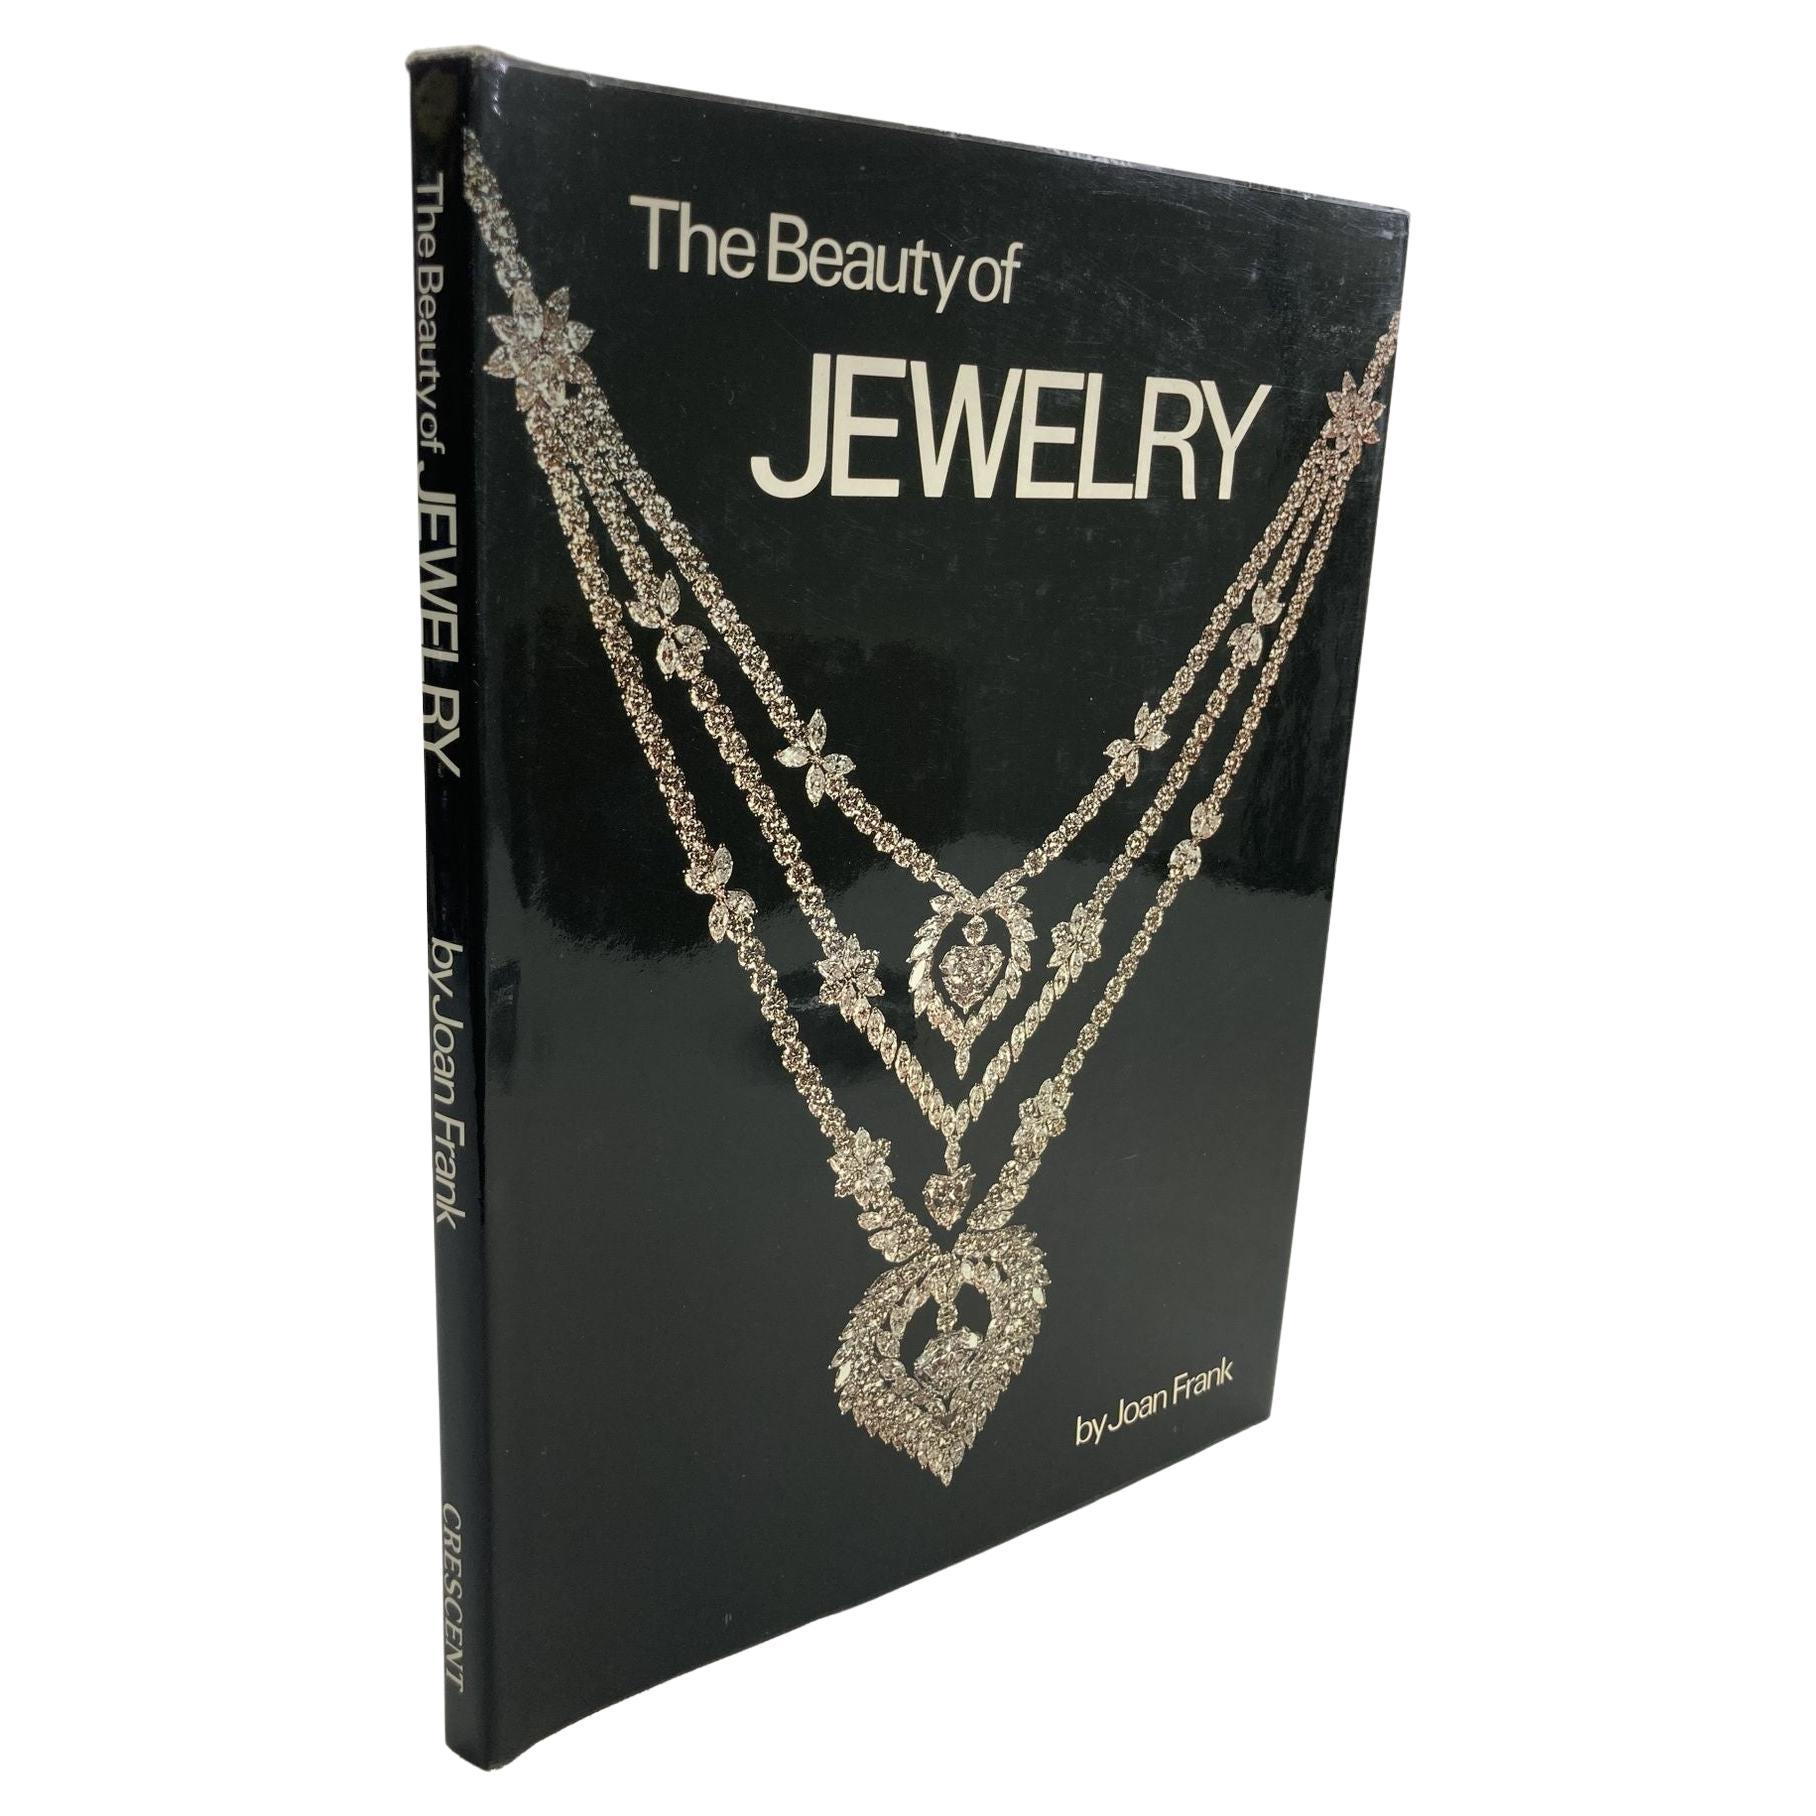 1979 The Beauty of Jewelry, Buch von Joan Frank